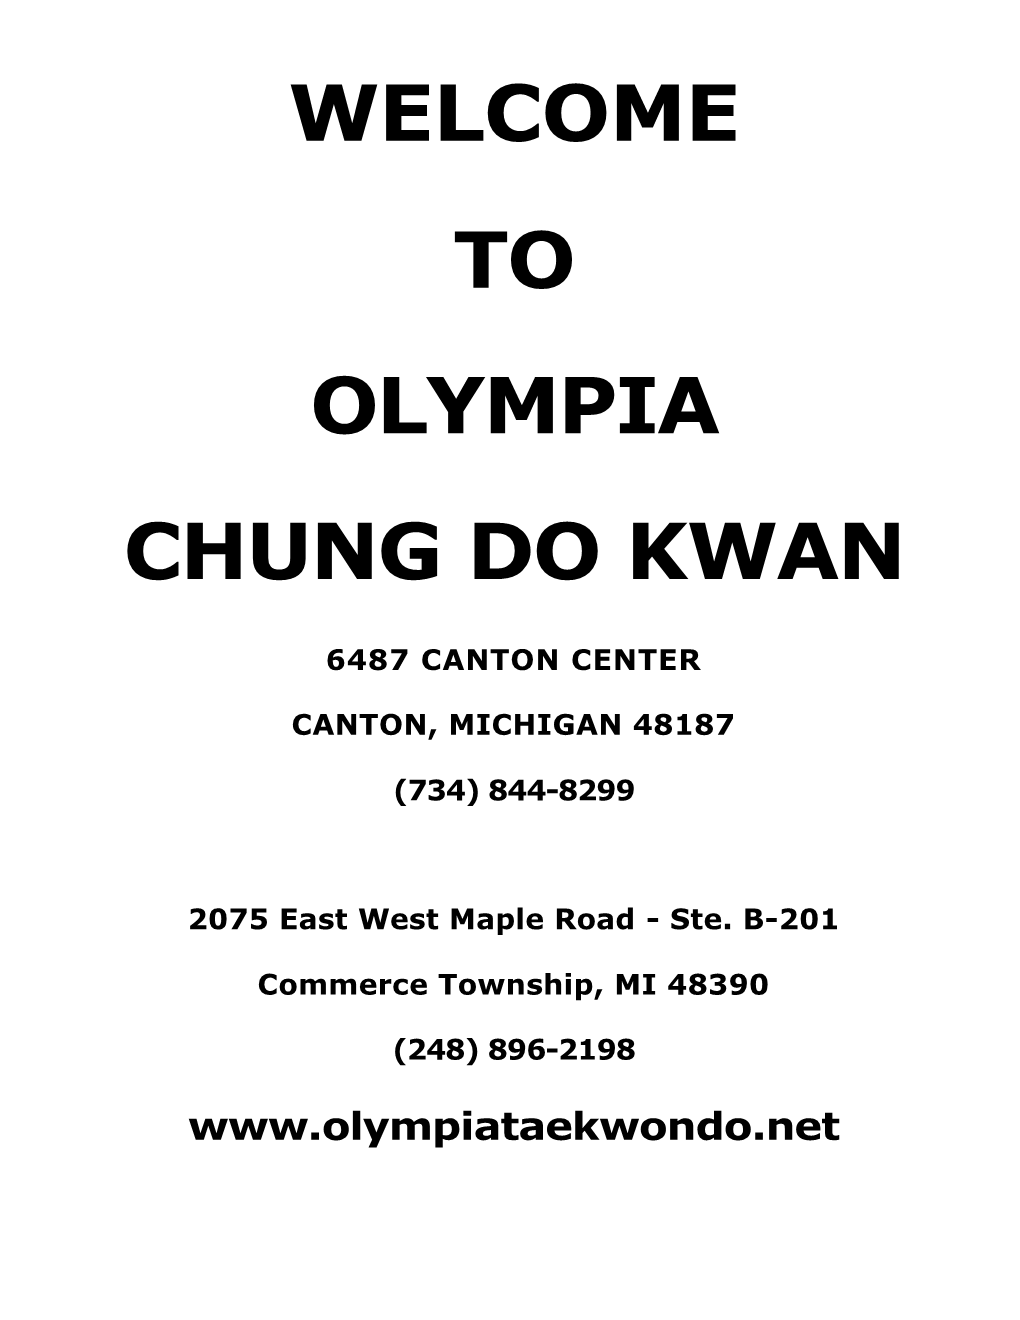 Welcome to Olympia Chung Do Kwan